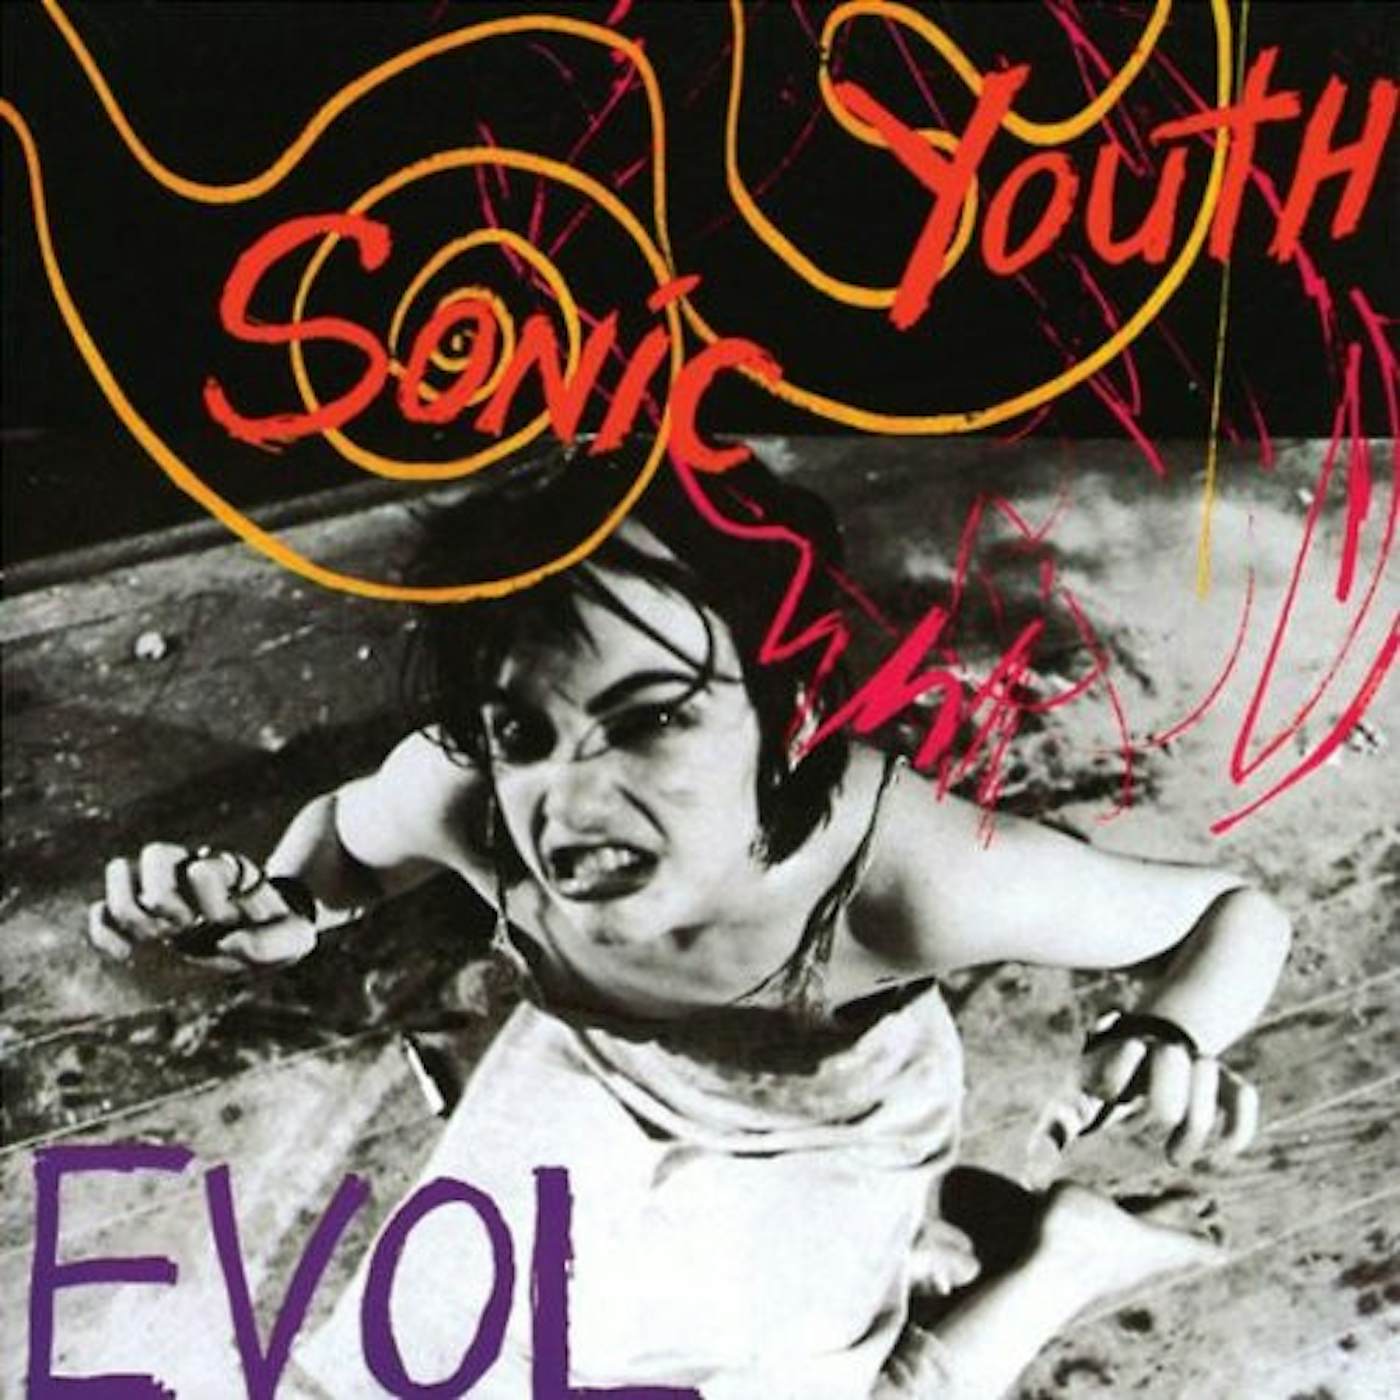 Sonic Youth Evol Vinyl Record